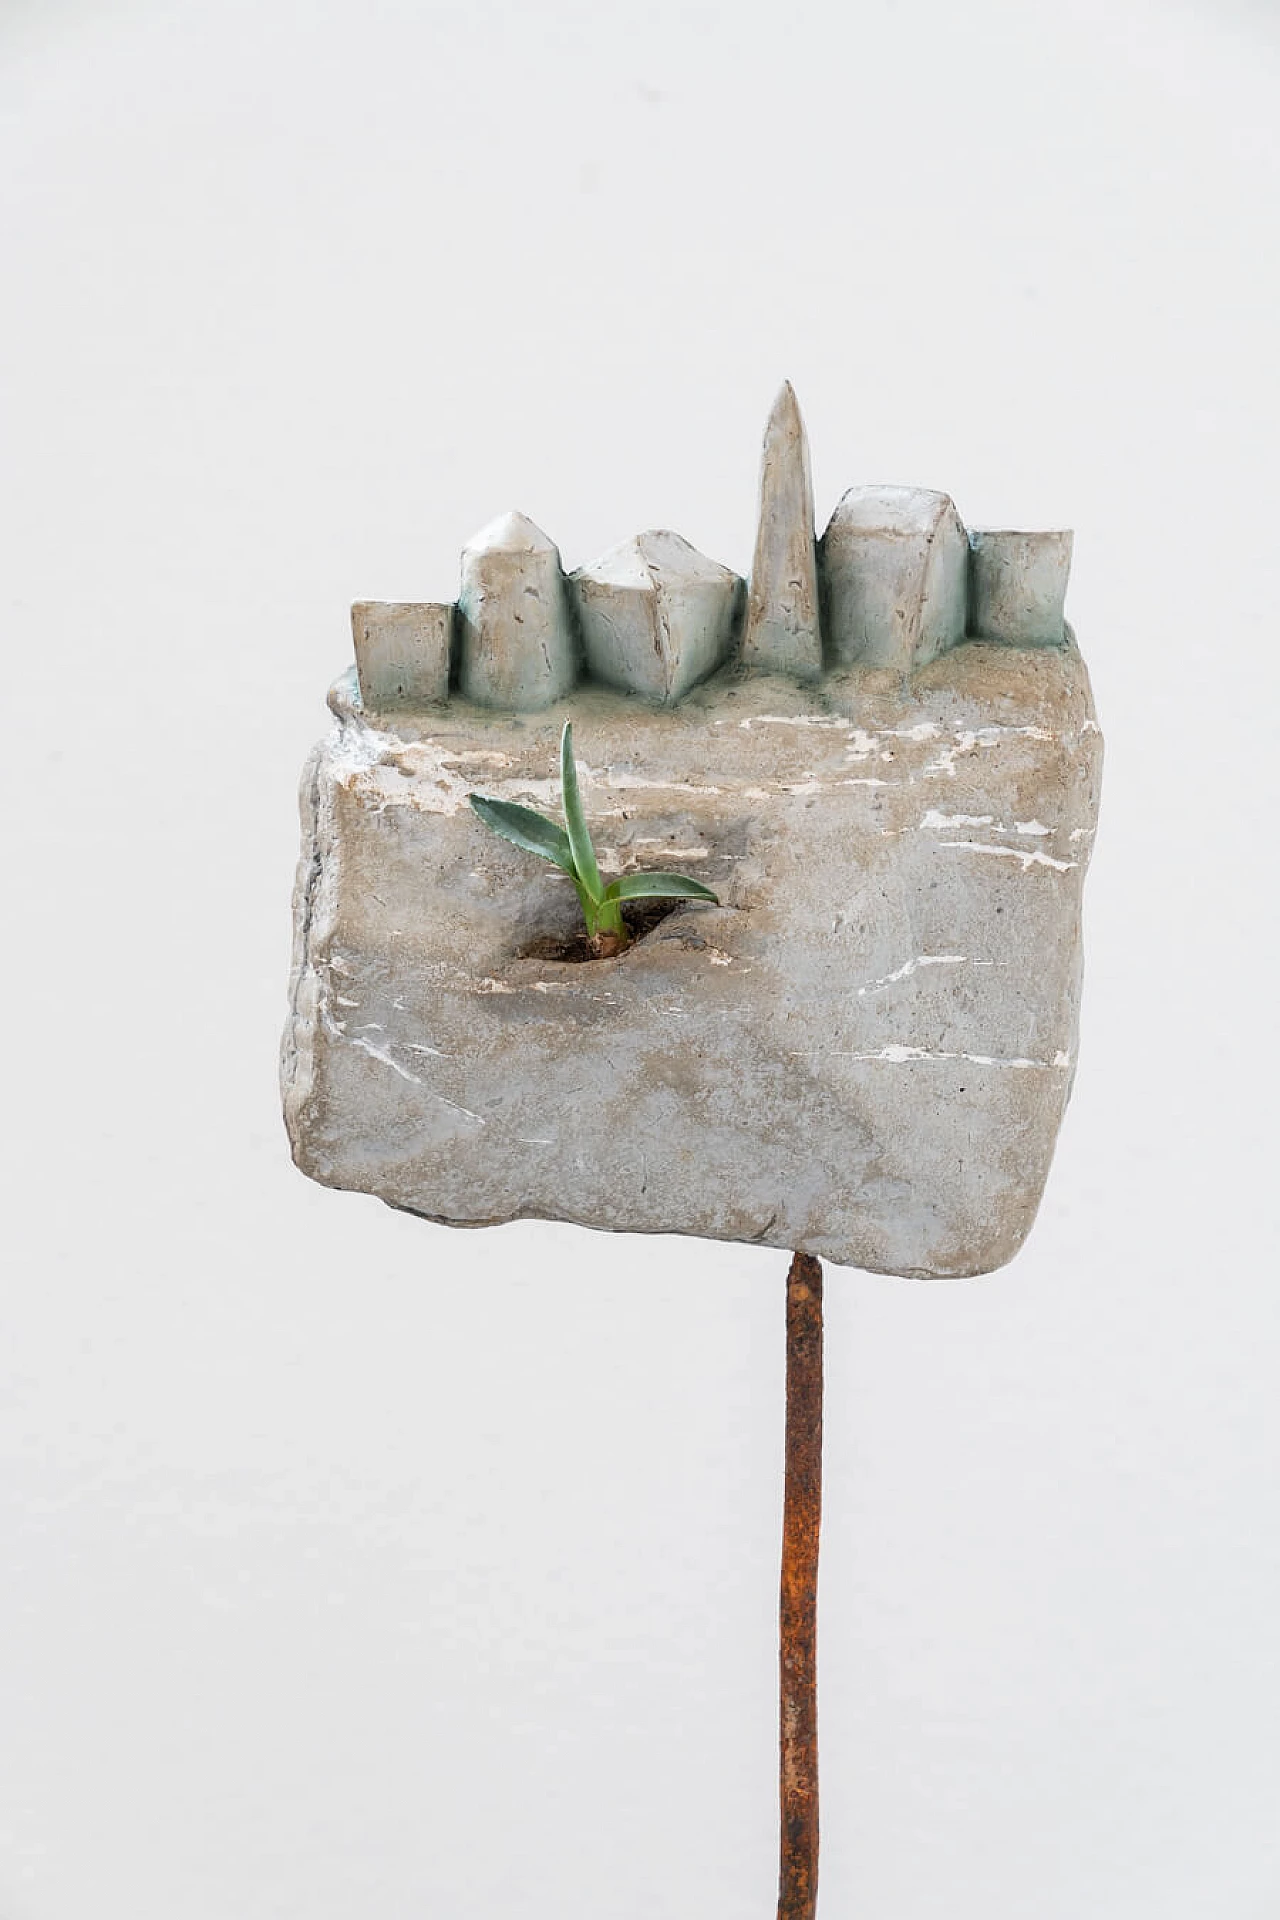 Tuniz Nicola, Ston sculpture/city Naka Zenobia, bamboo and zinc, 1990 7